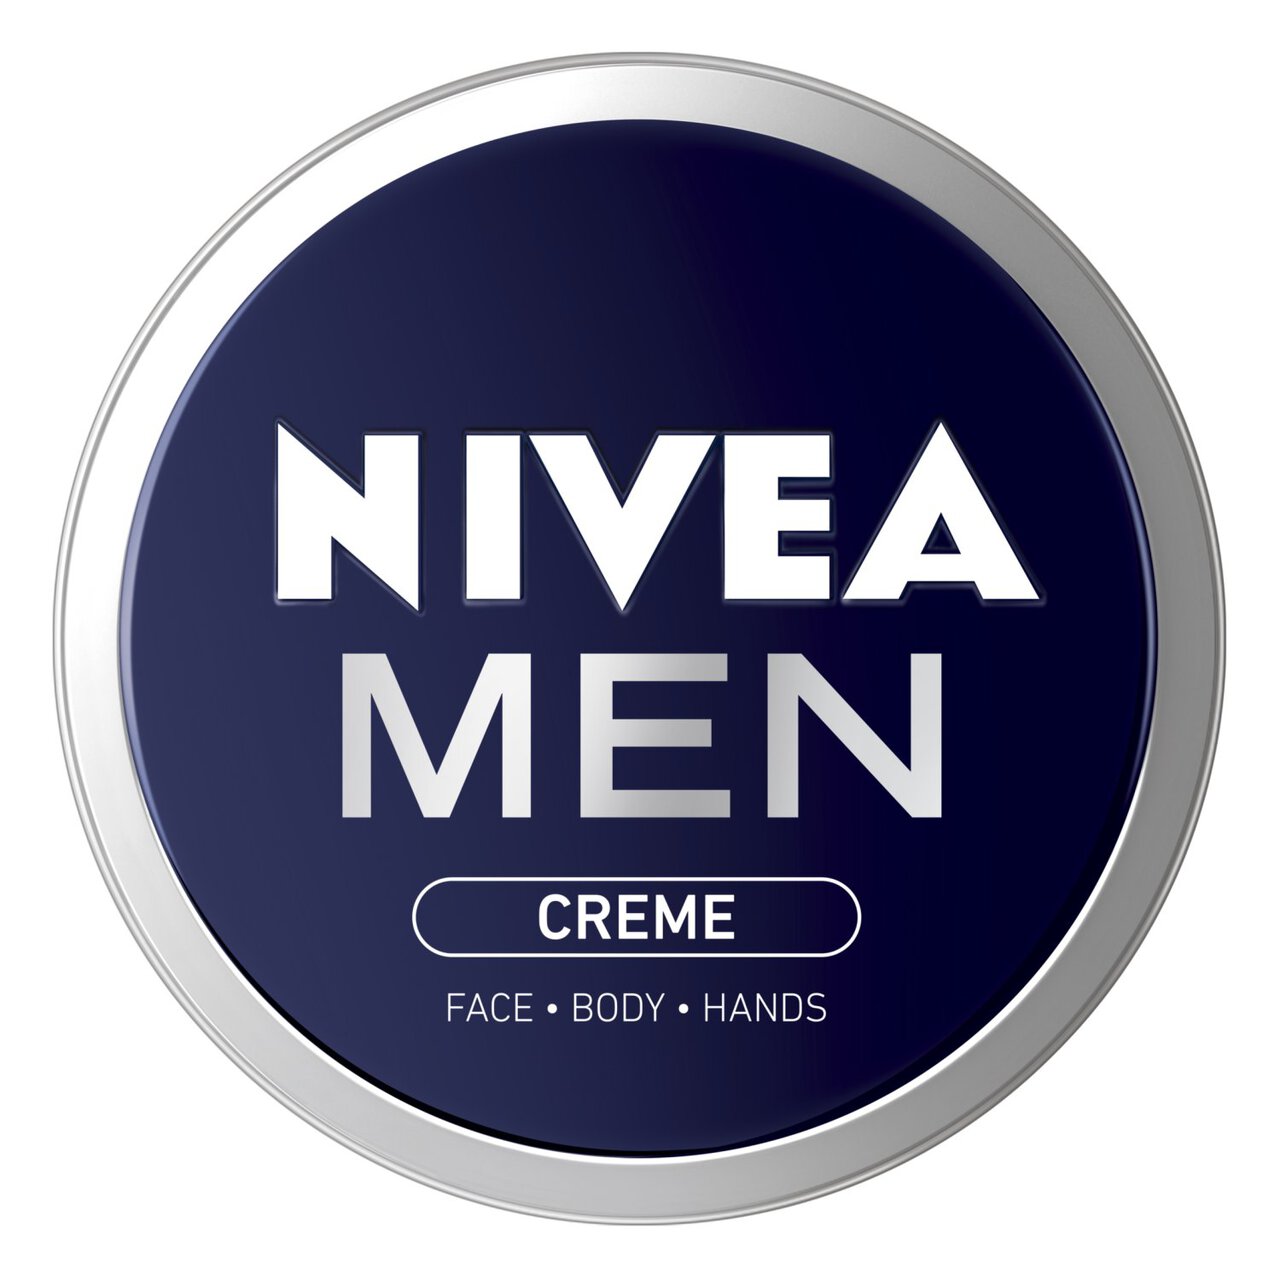 NIVEA MEN Creme, Moisturiser Cream for Face, Body & Hands 150ml